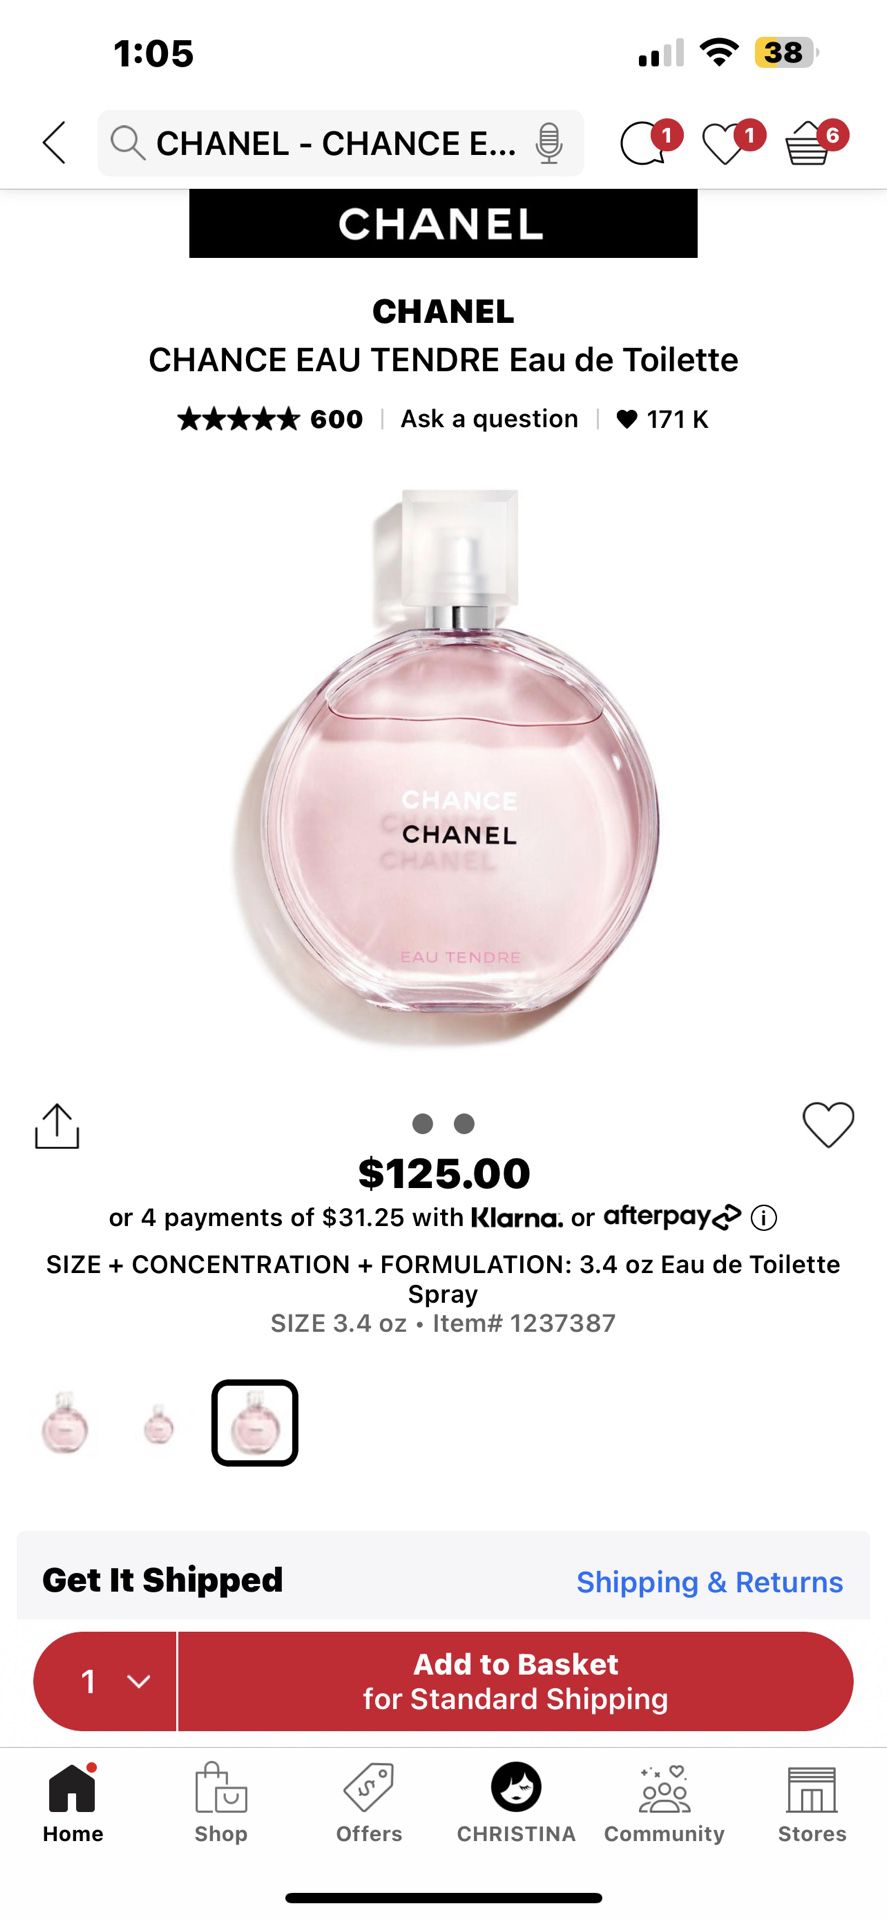 New Chanel Perfume 